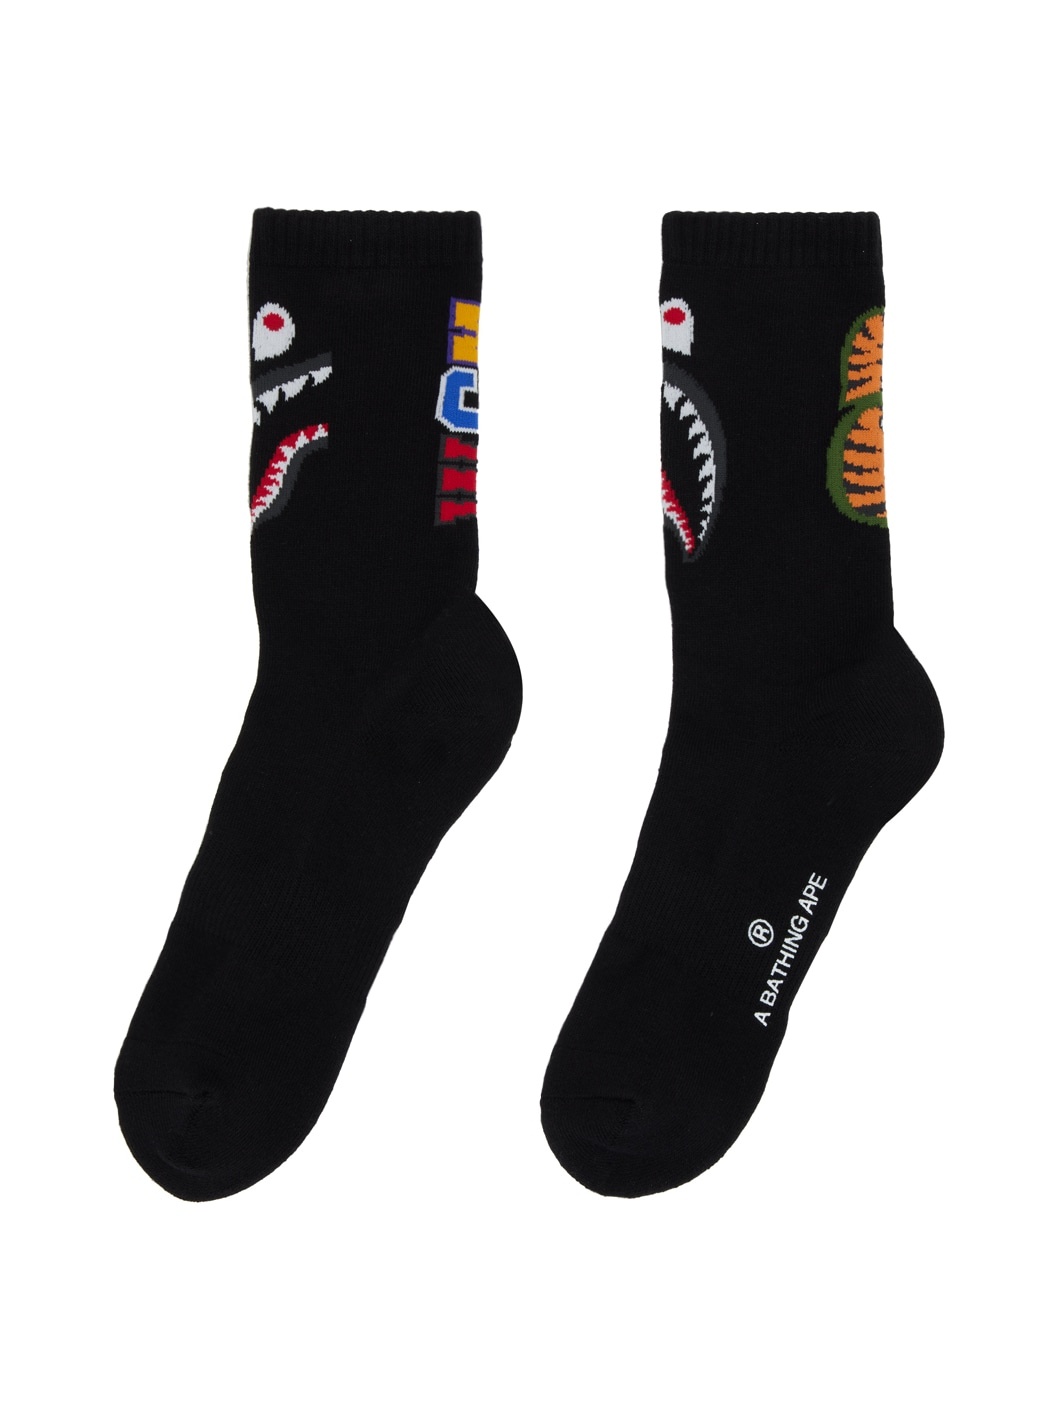 Black Shark Socks - 2